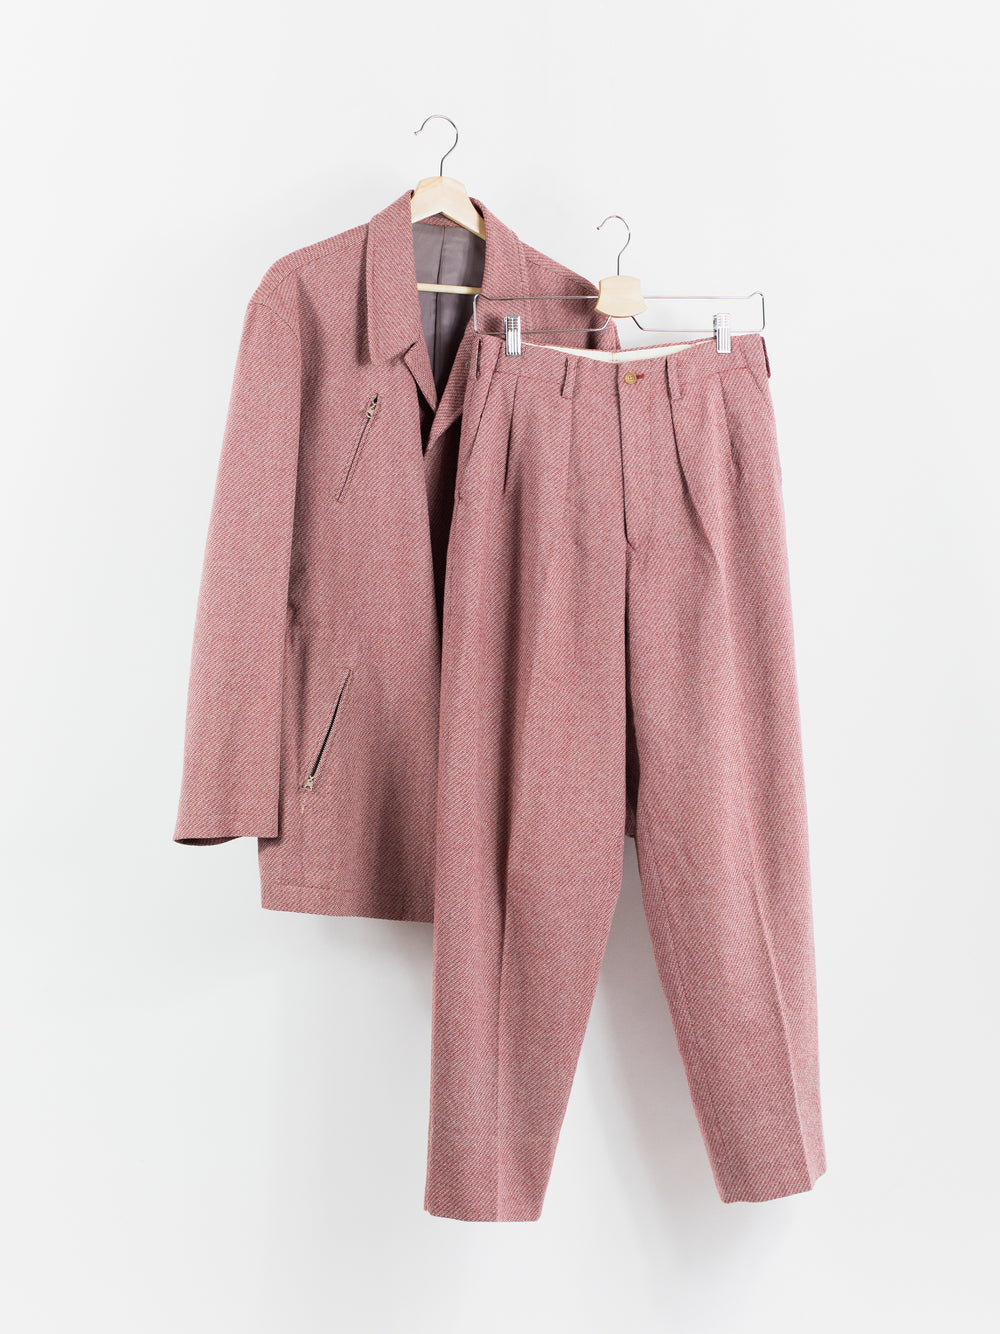 Yohji Yamamoto Y's For Men 90s Pink 2-Piece Suit